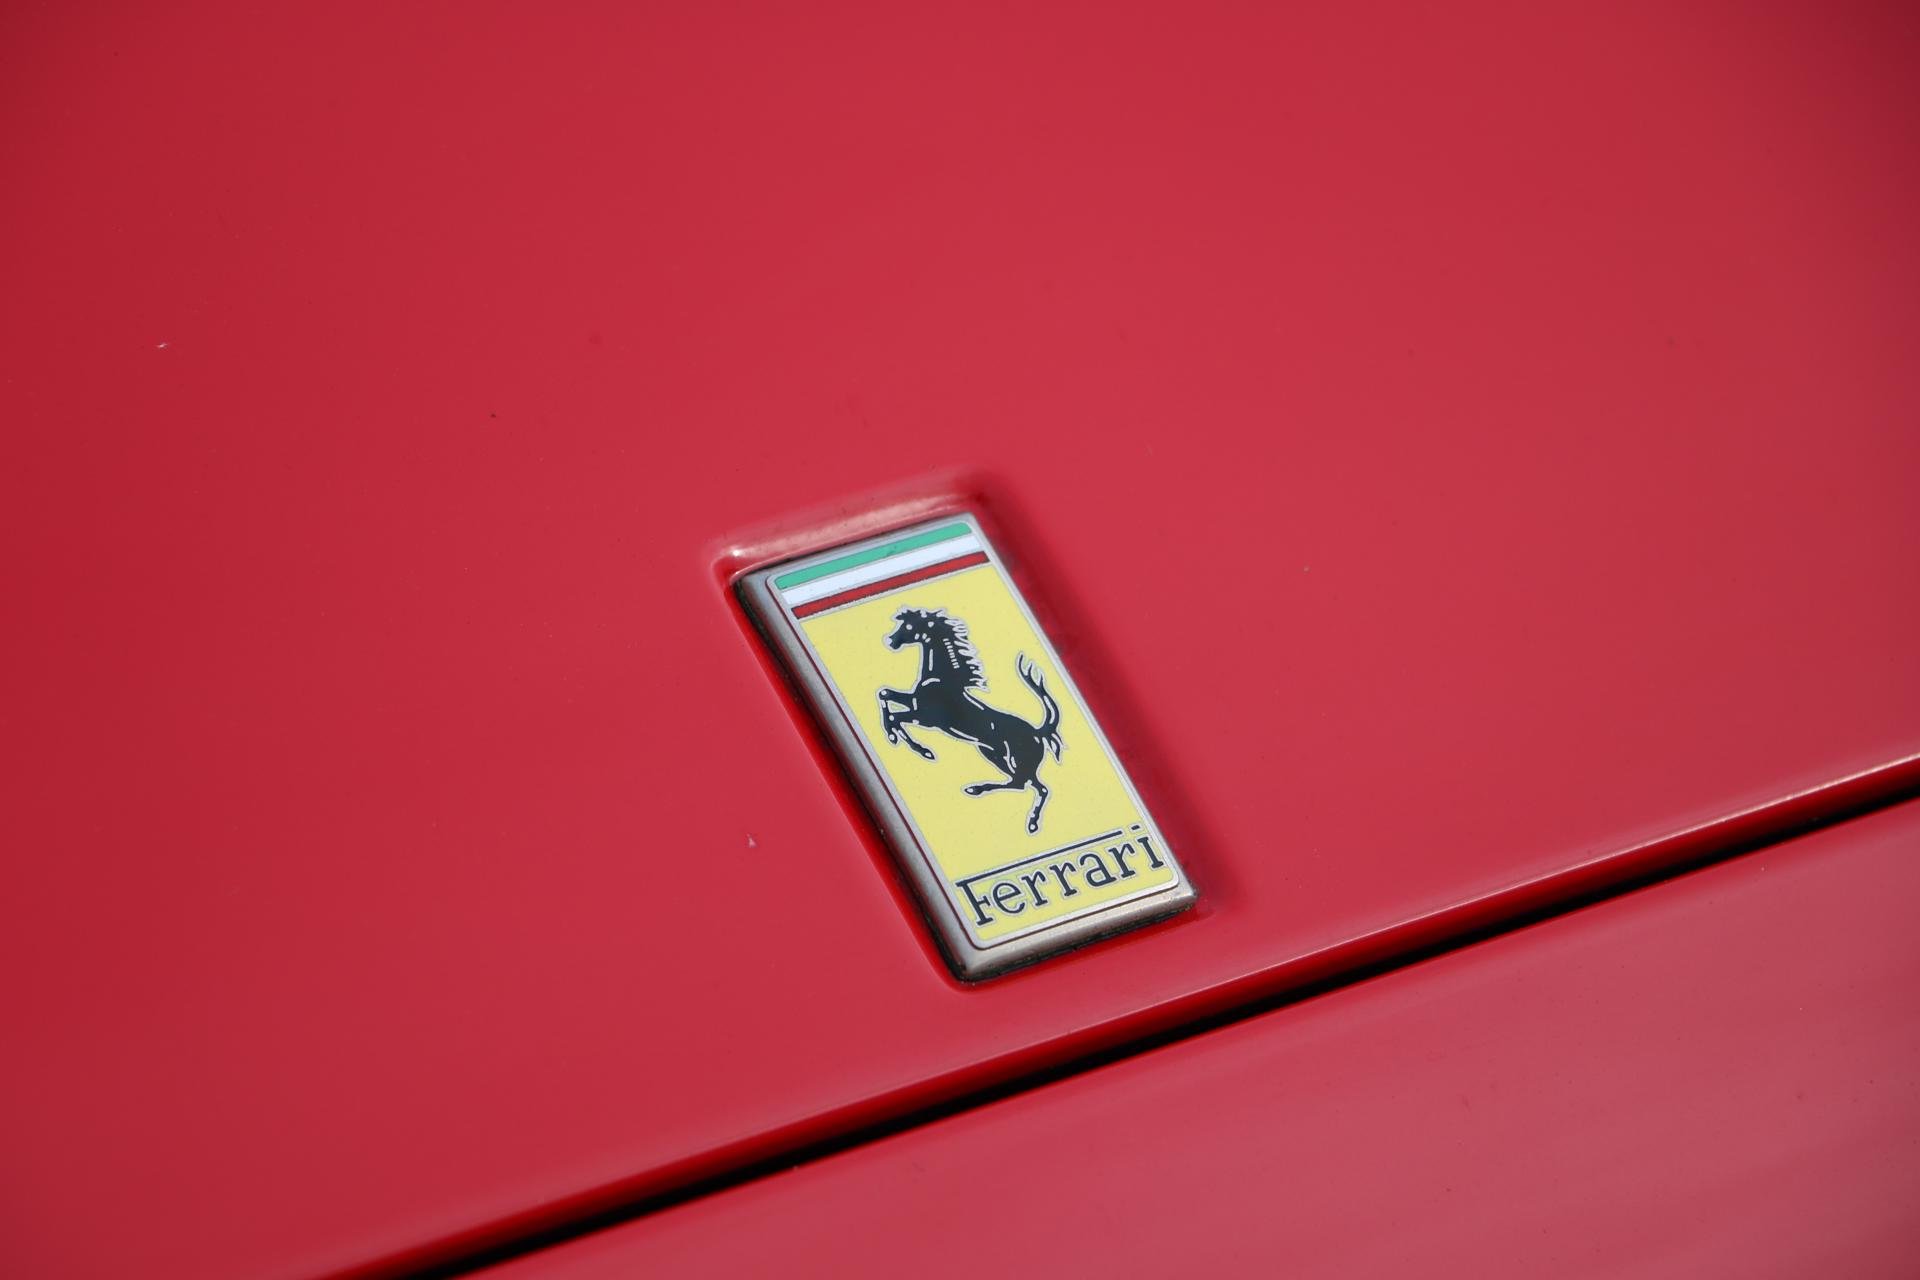 Real Art on Wheels | Ferrari Mondial T Convertible